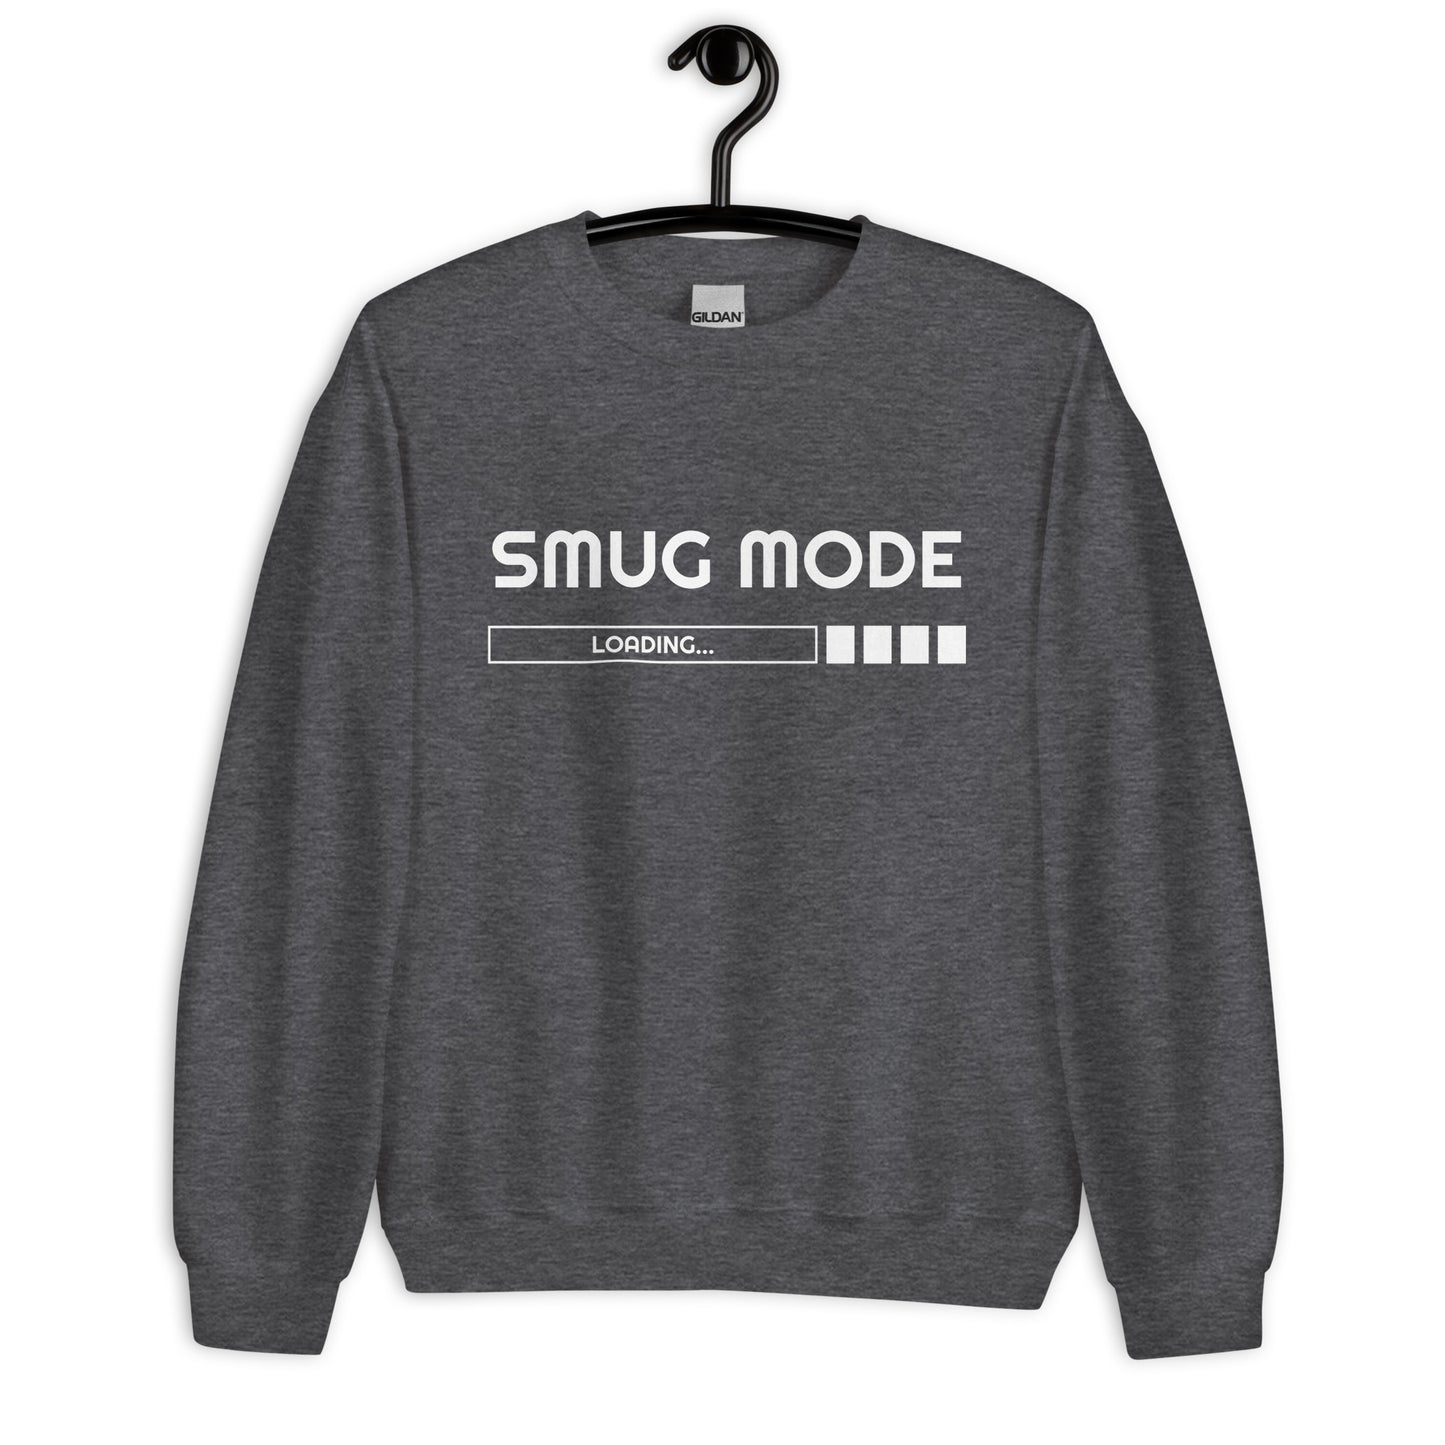 Smug Mode Comedy Quote Sweatshirt